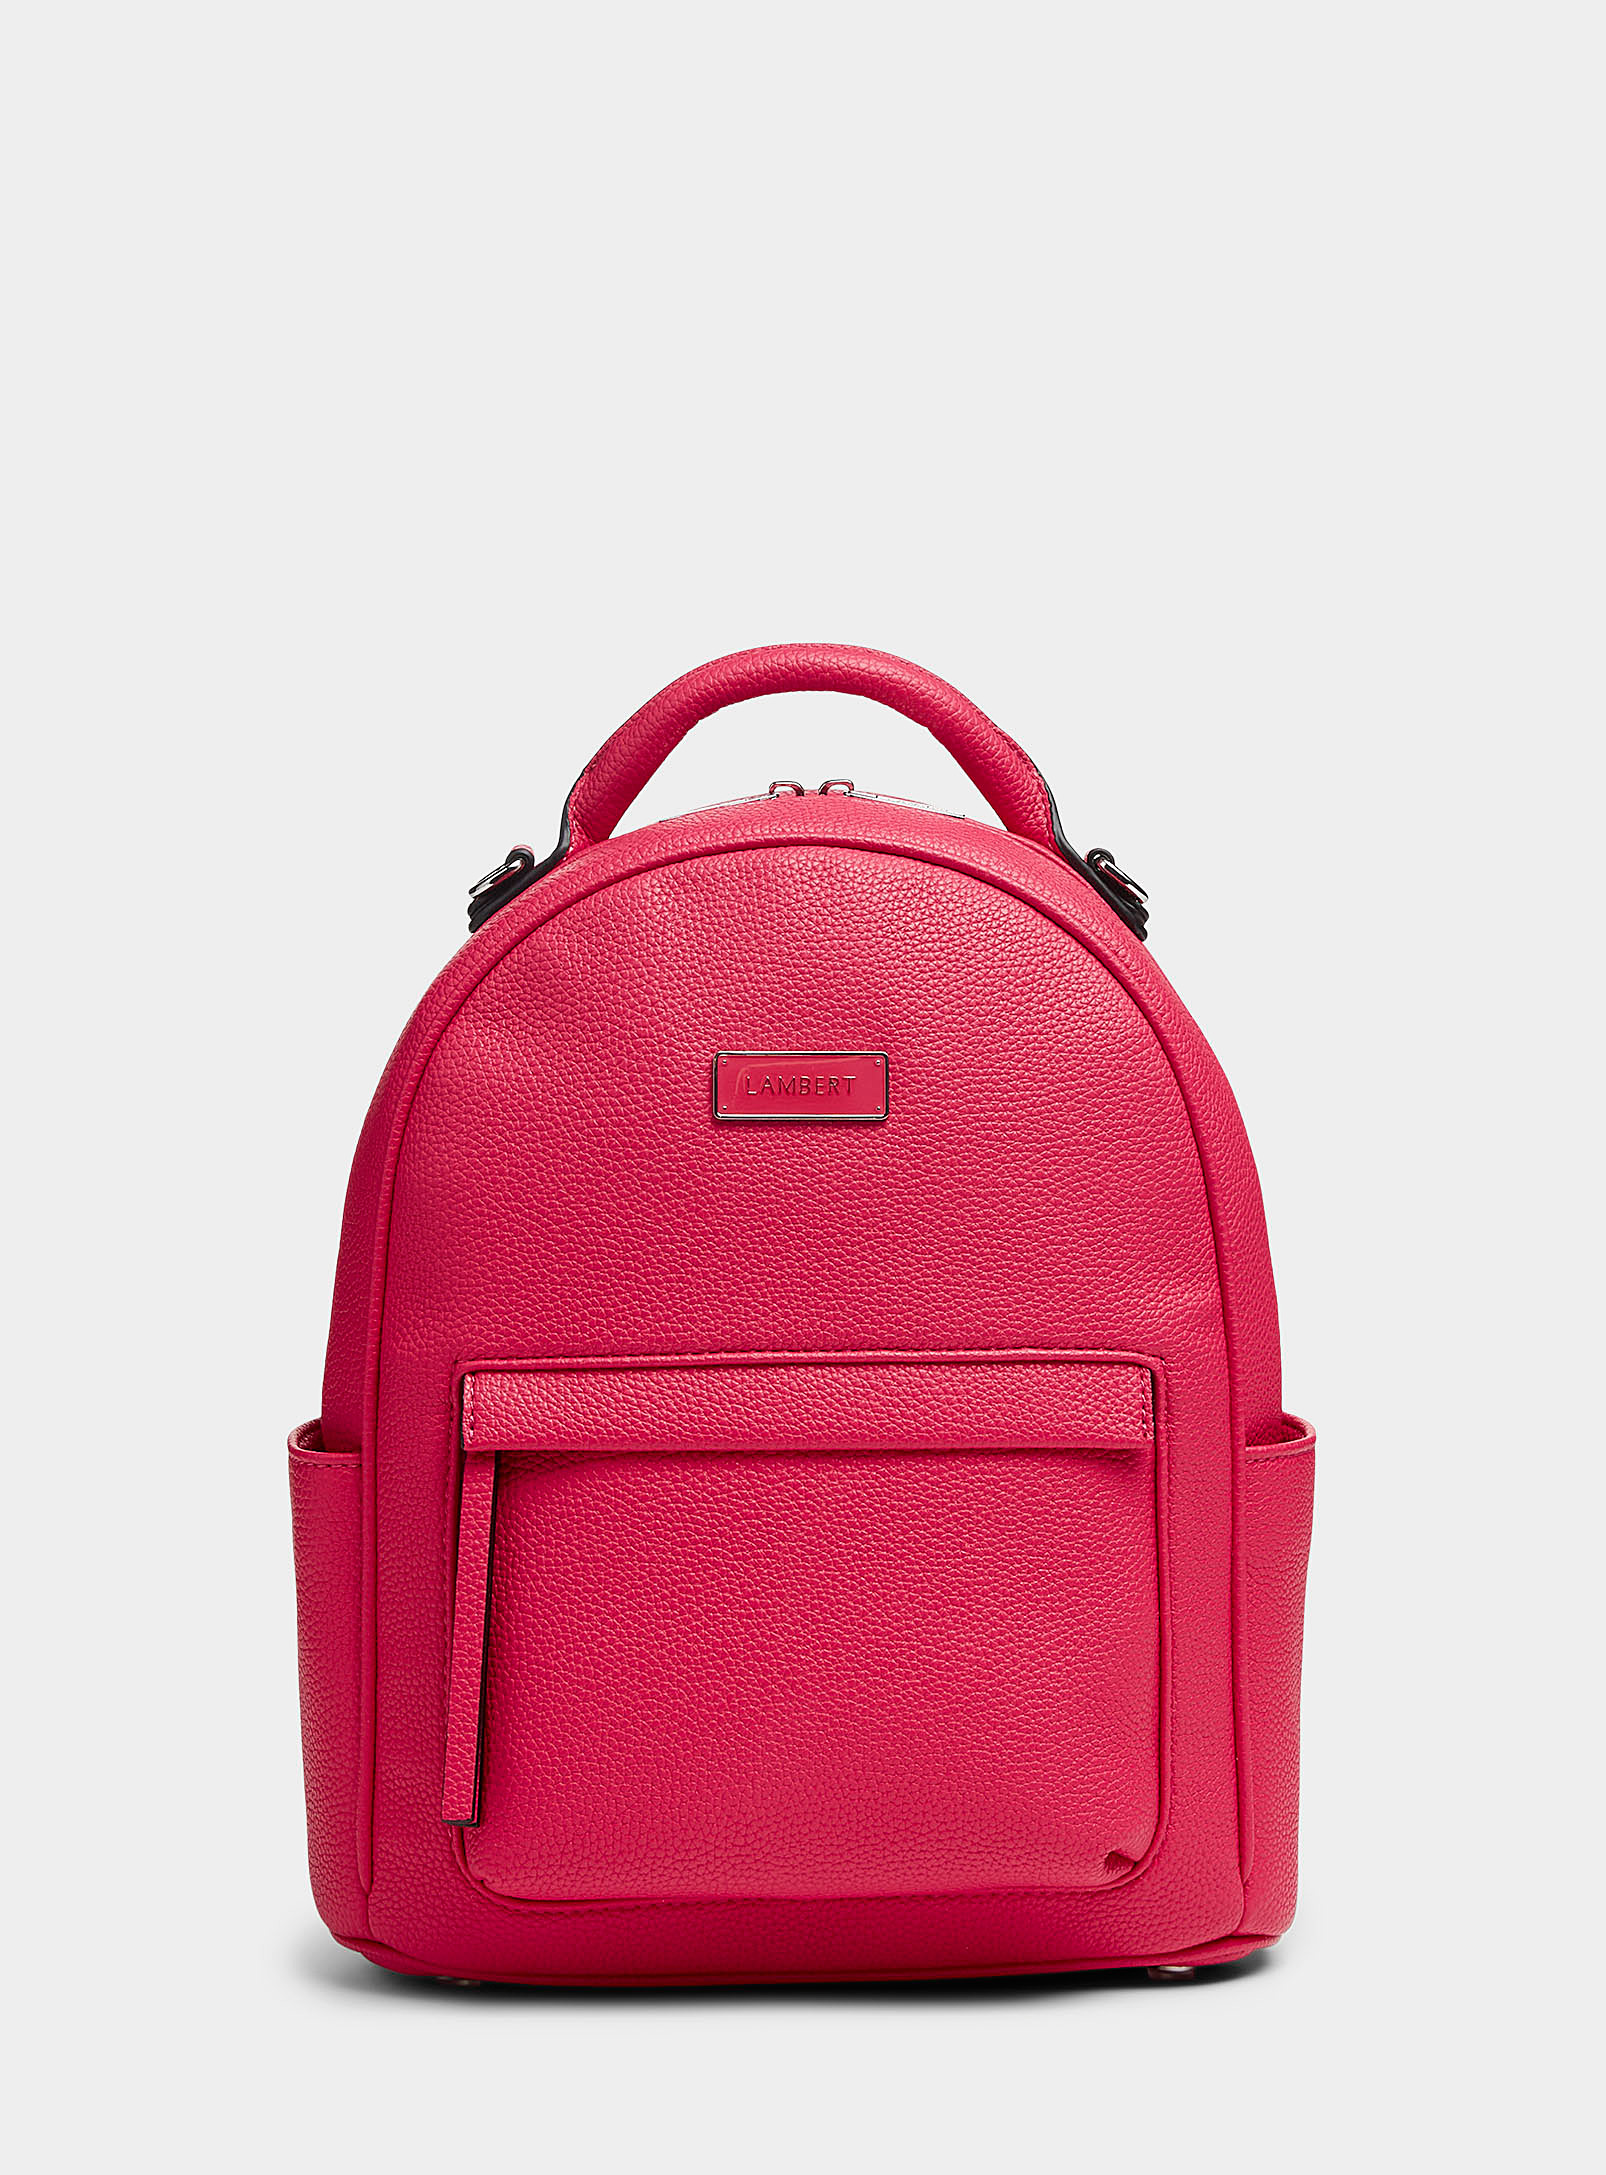 Lambert Maude Pebbled Backpack In Pink